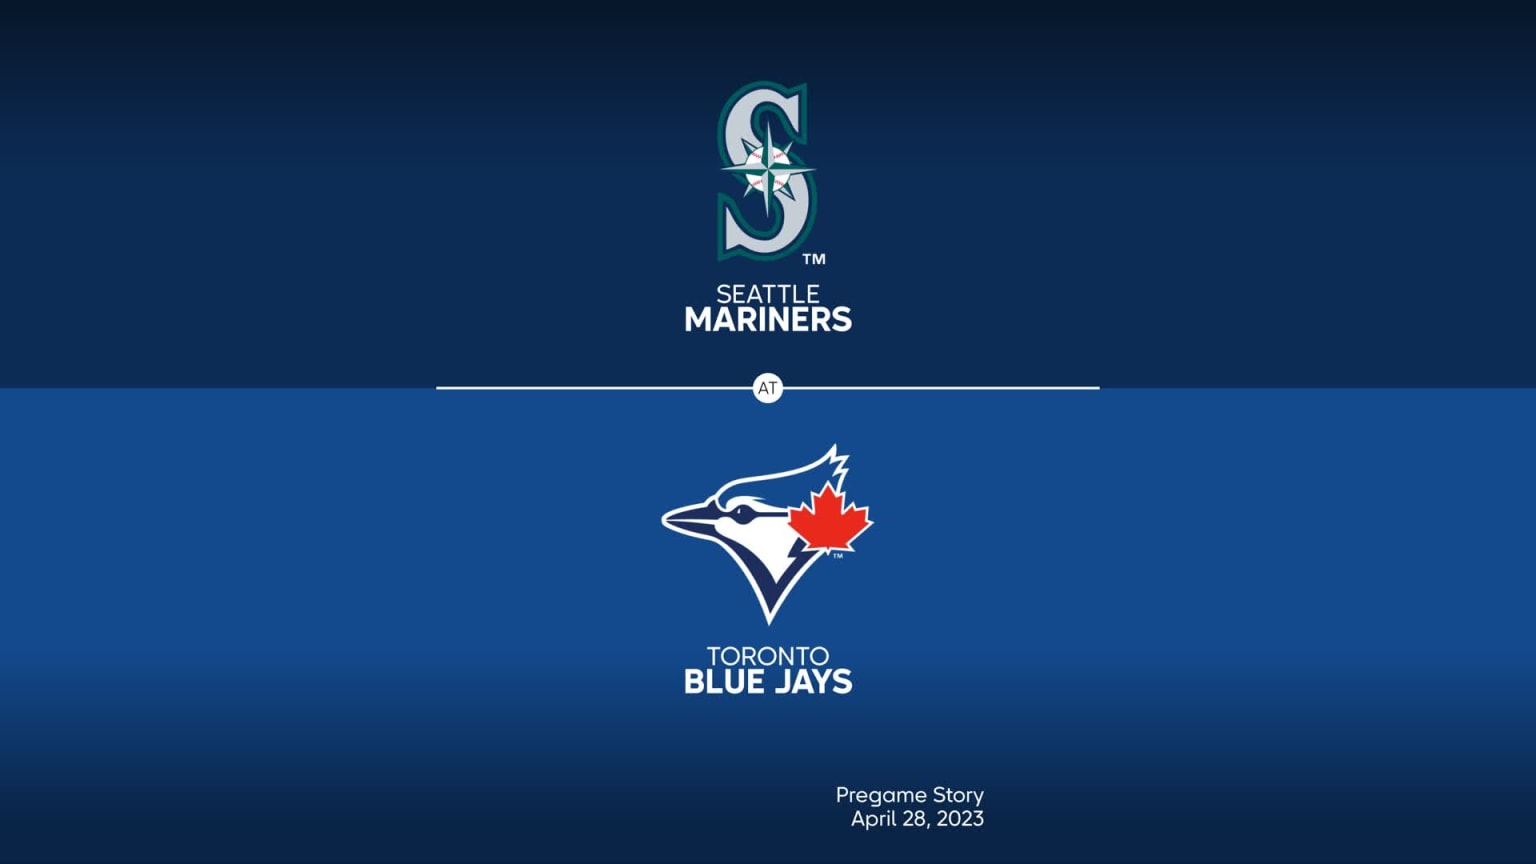 Seattle Mariners vs. Toronto Blue Jays, April 28, 2023